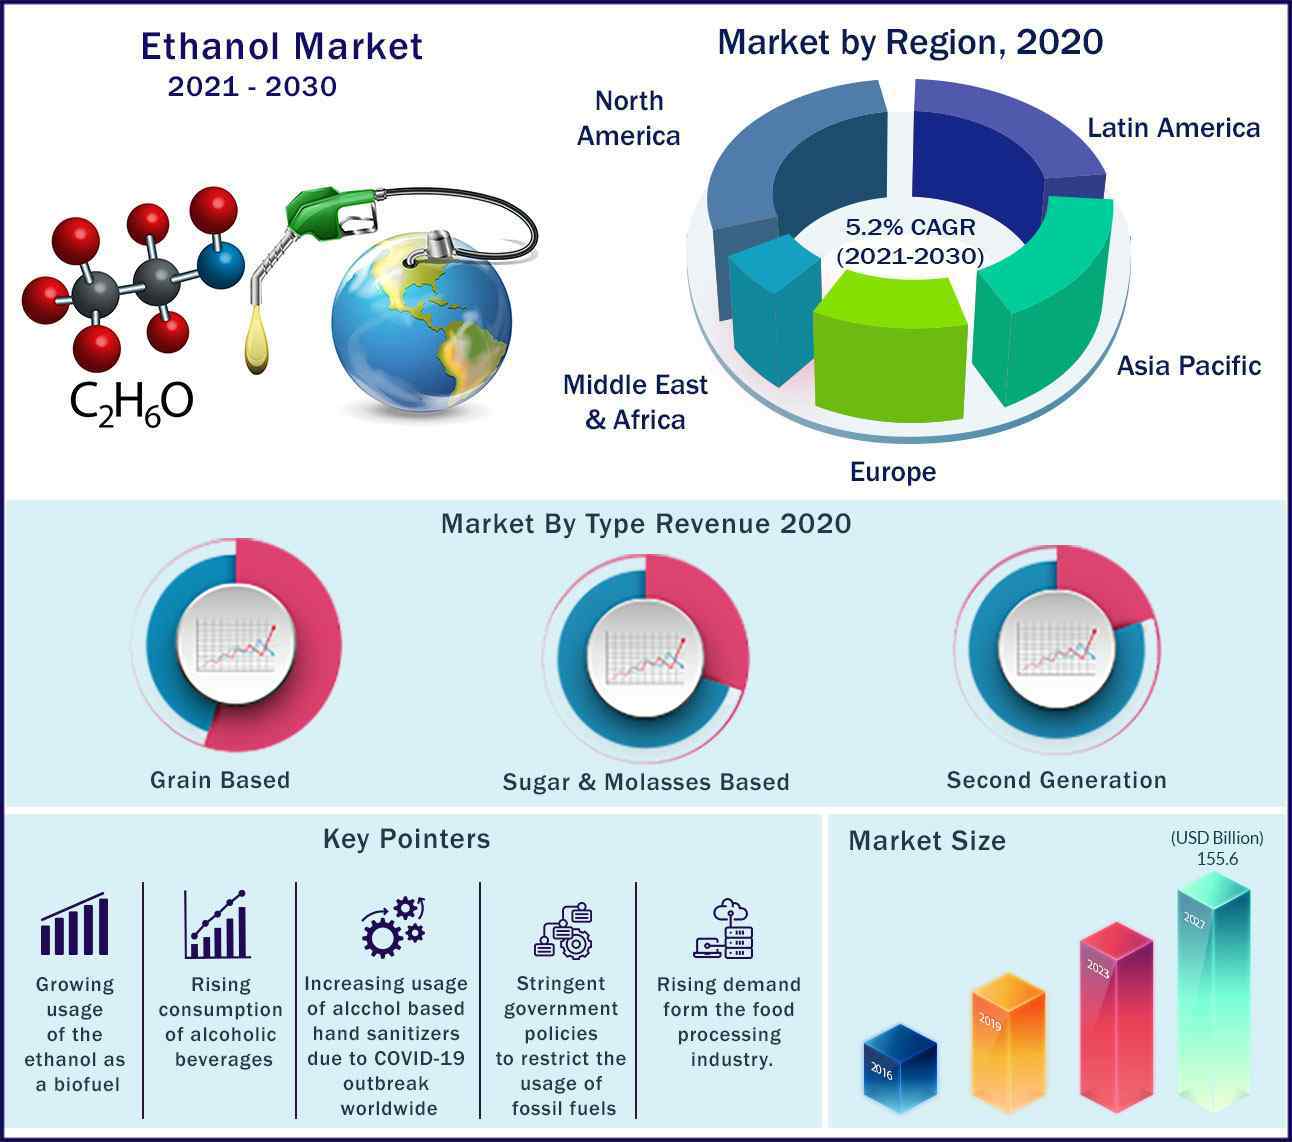 Global Ethanol Market 2021 to 2030